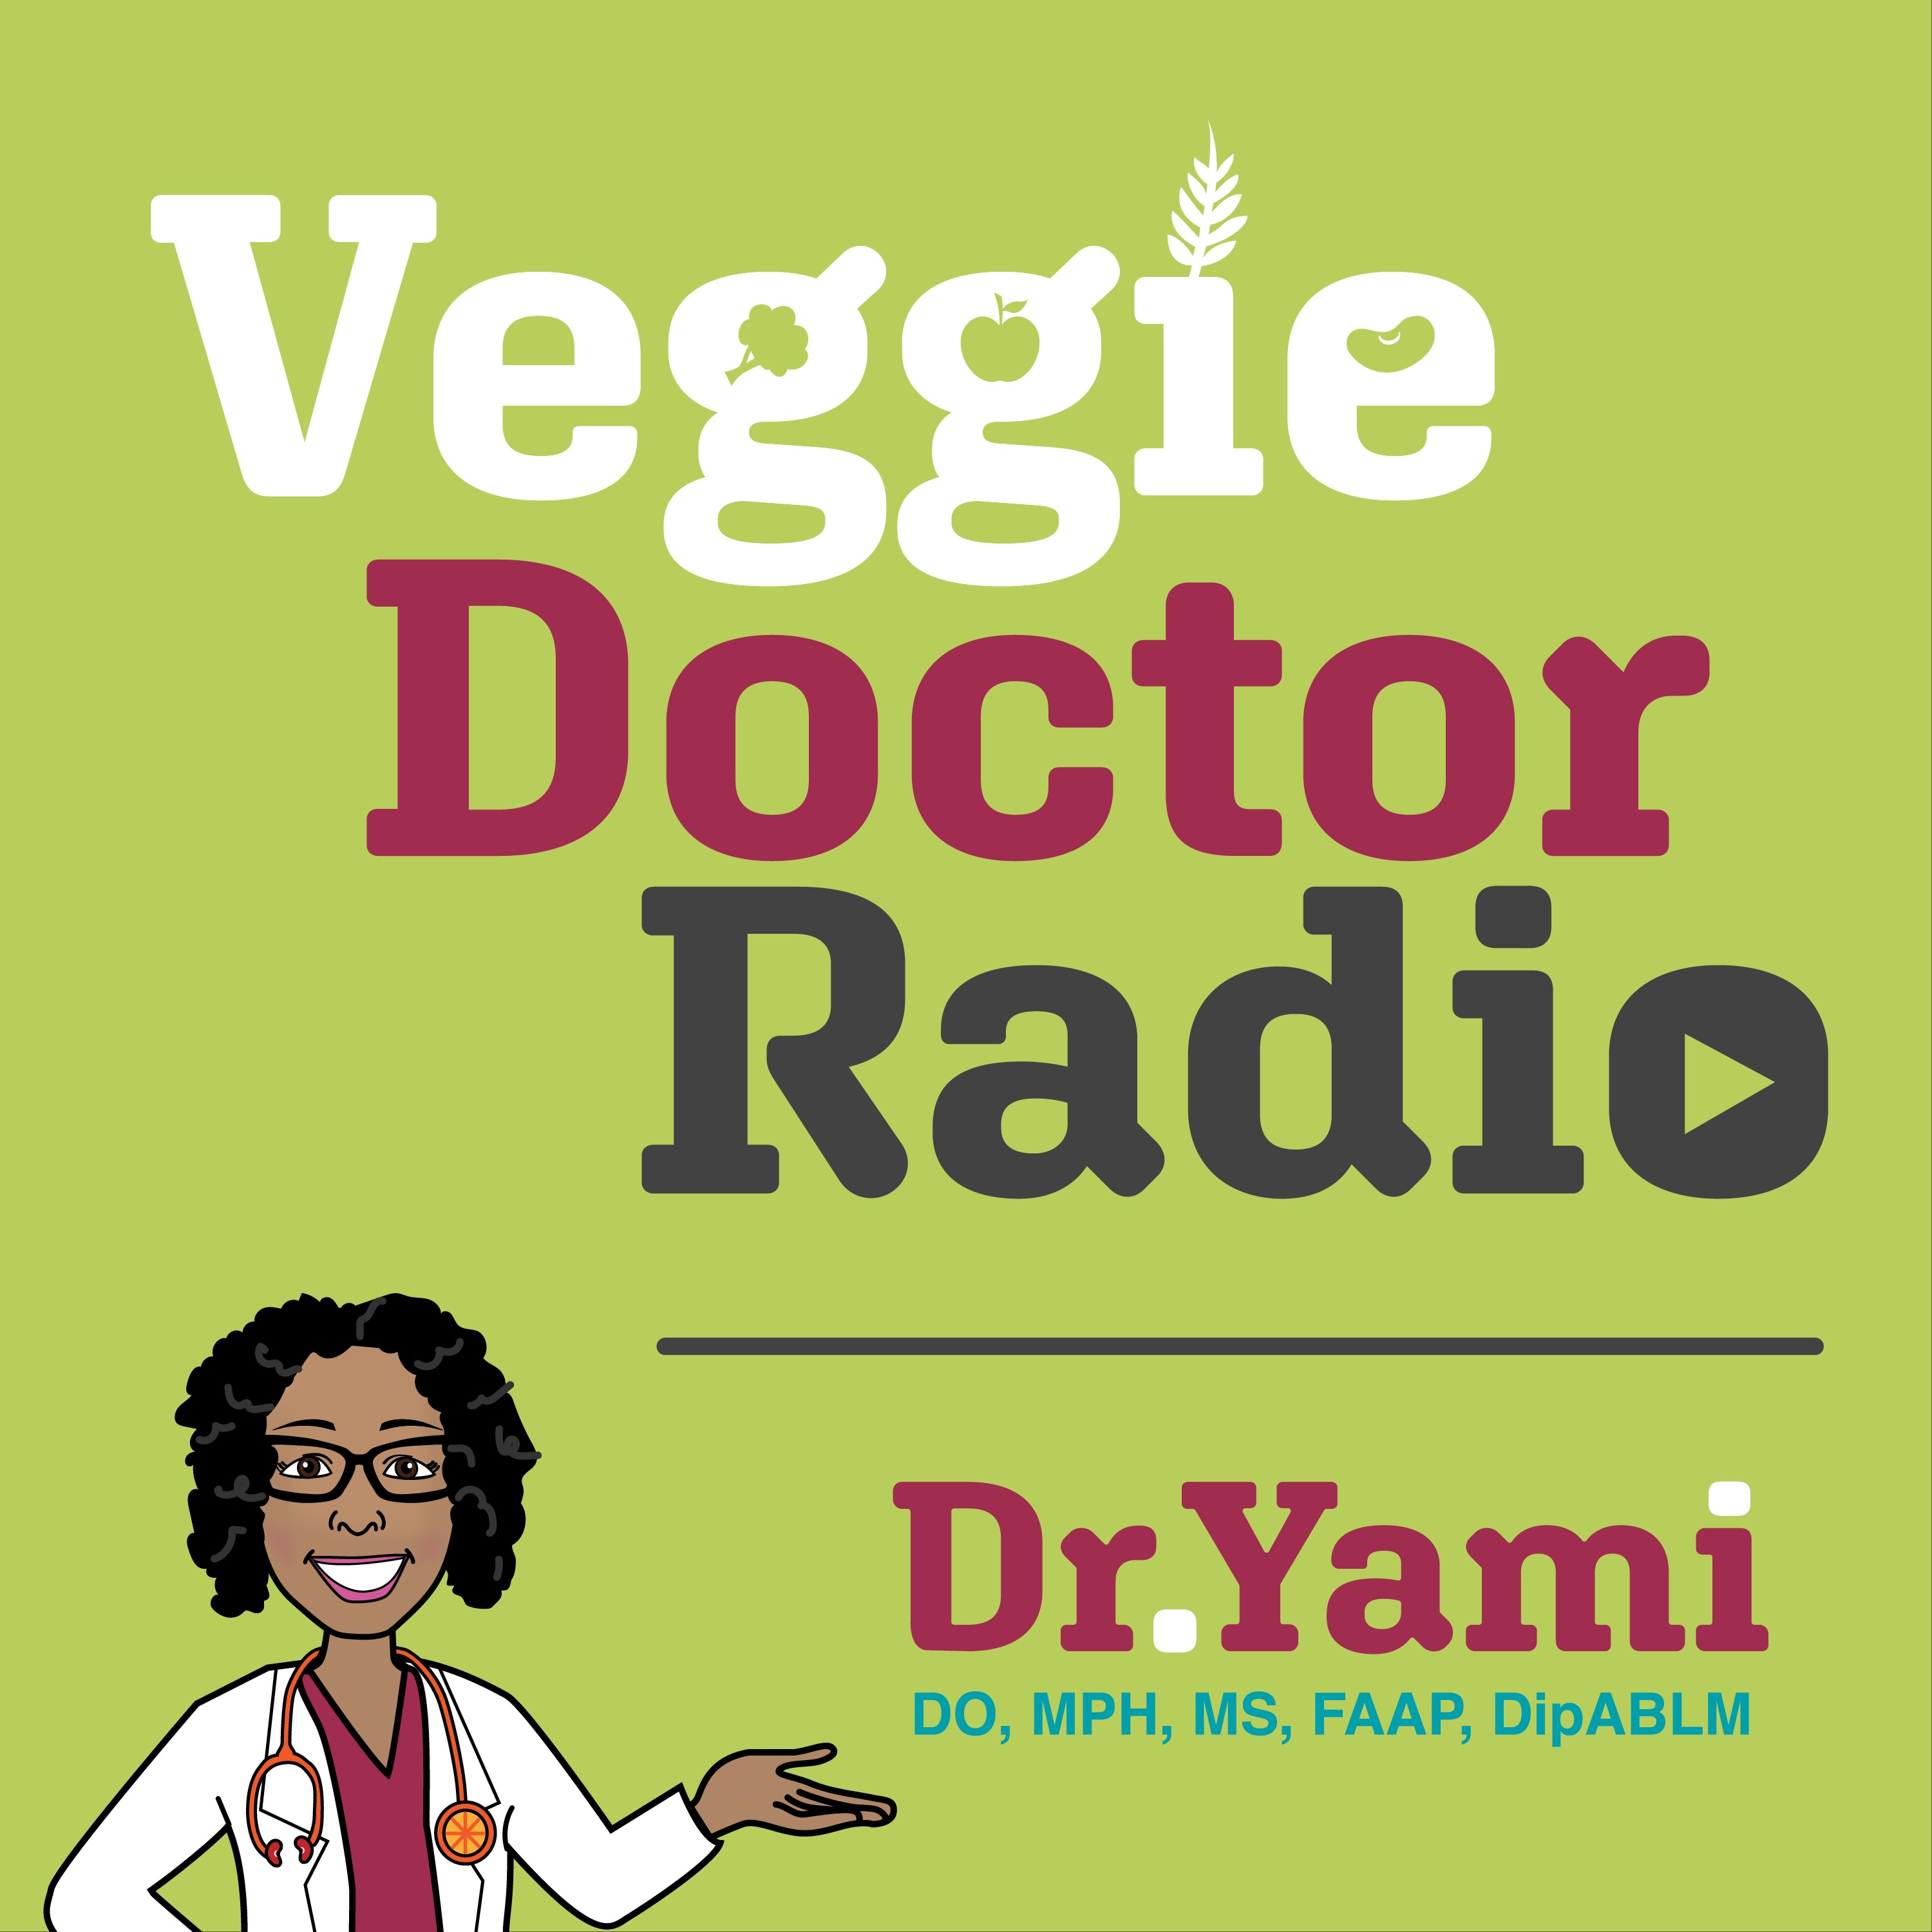 187: 4 Books That Have Changed My Life (Veggie Doctor Radio)